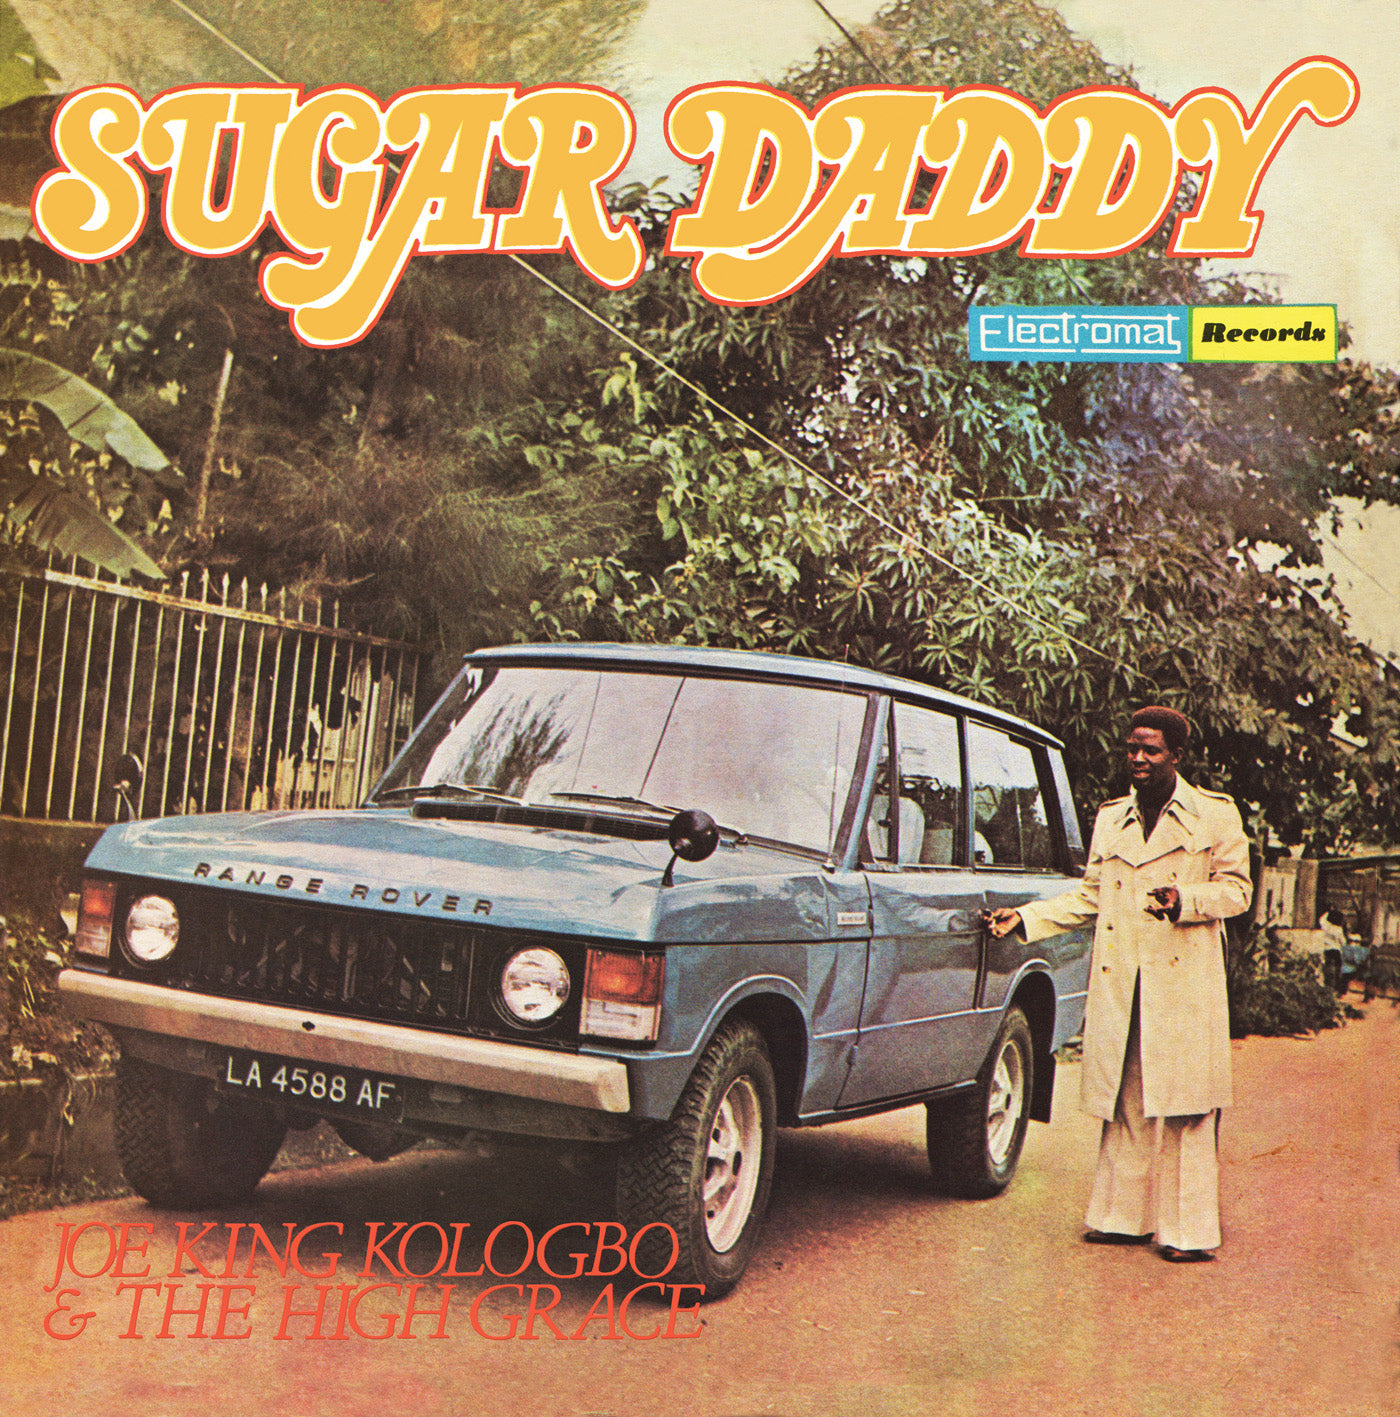 Joe King & The High Grace Kologbo - Sugar Daddy (Vinyl)